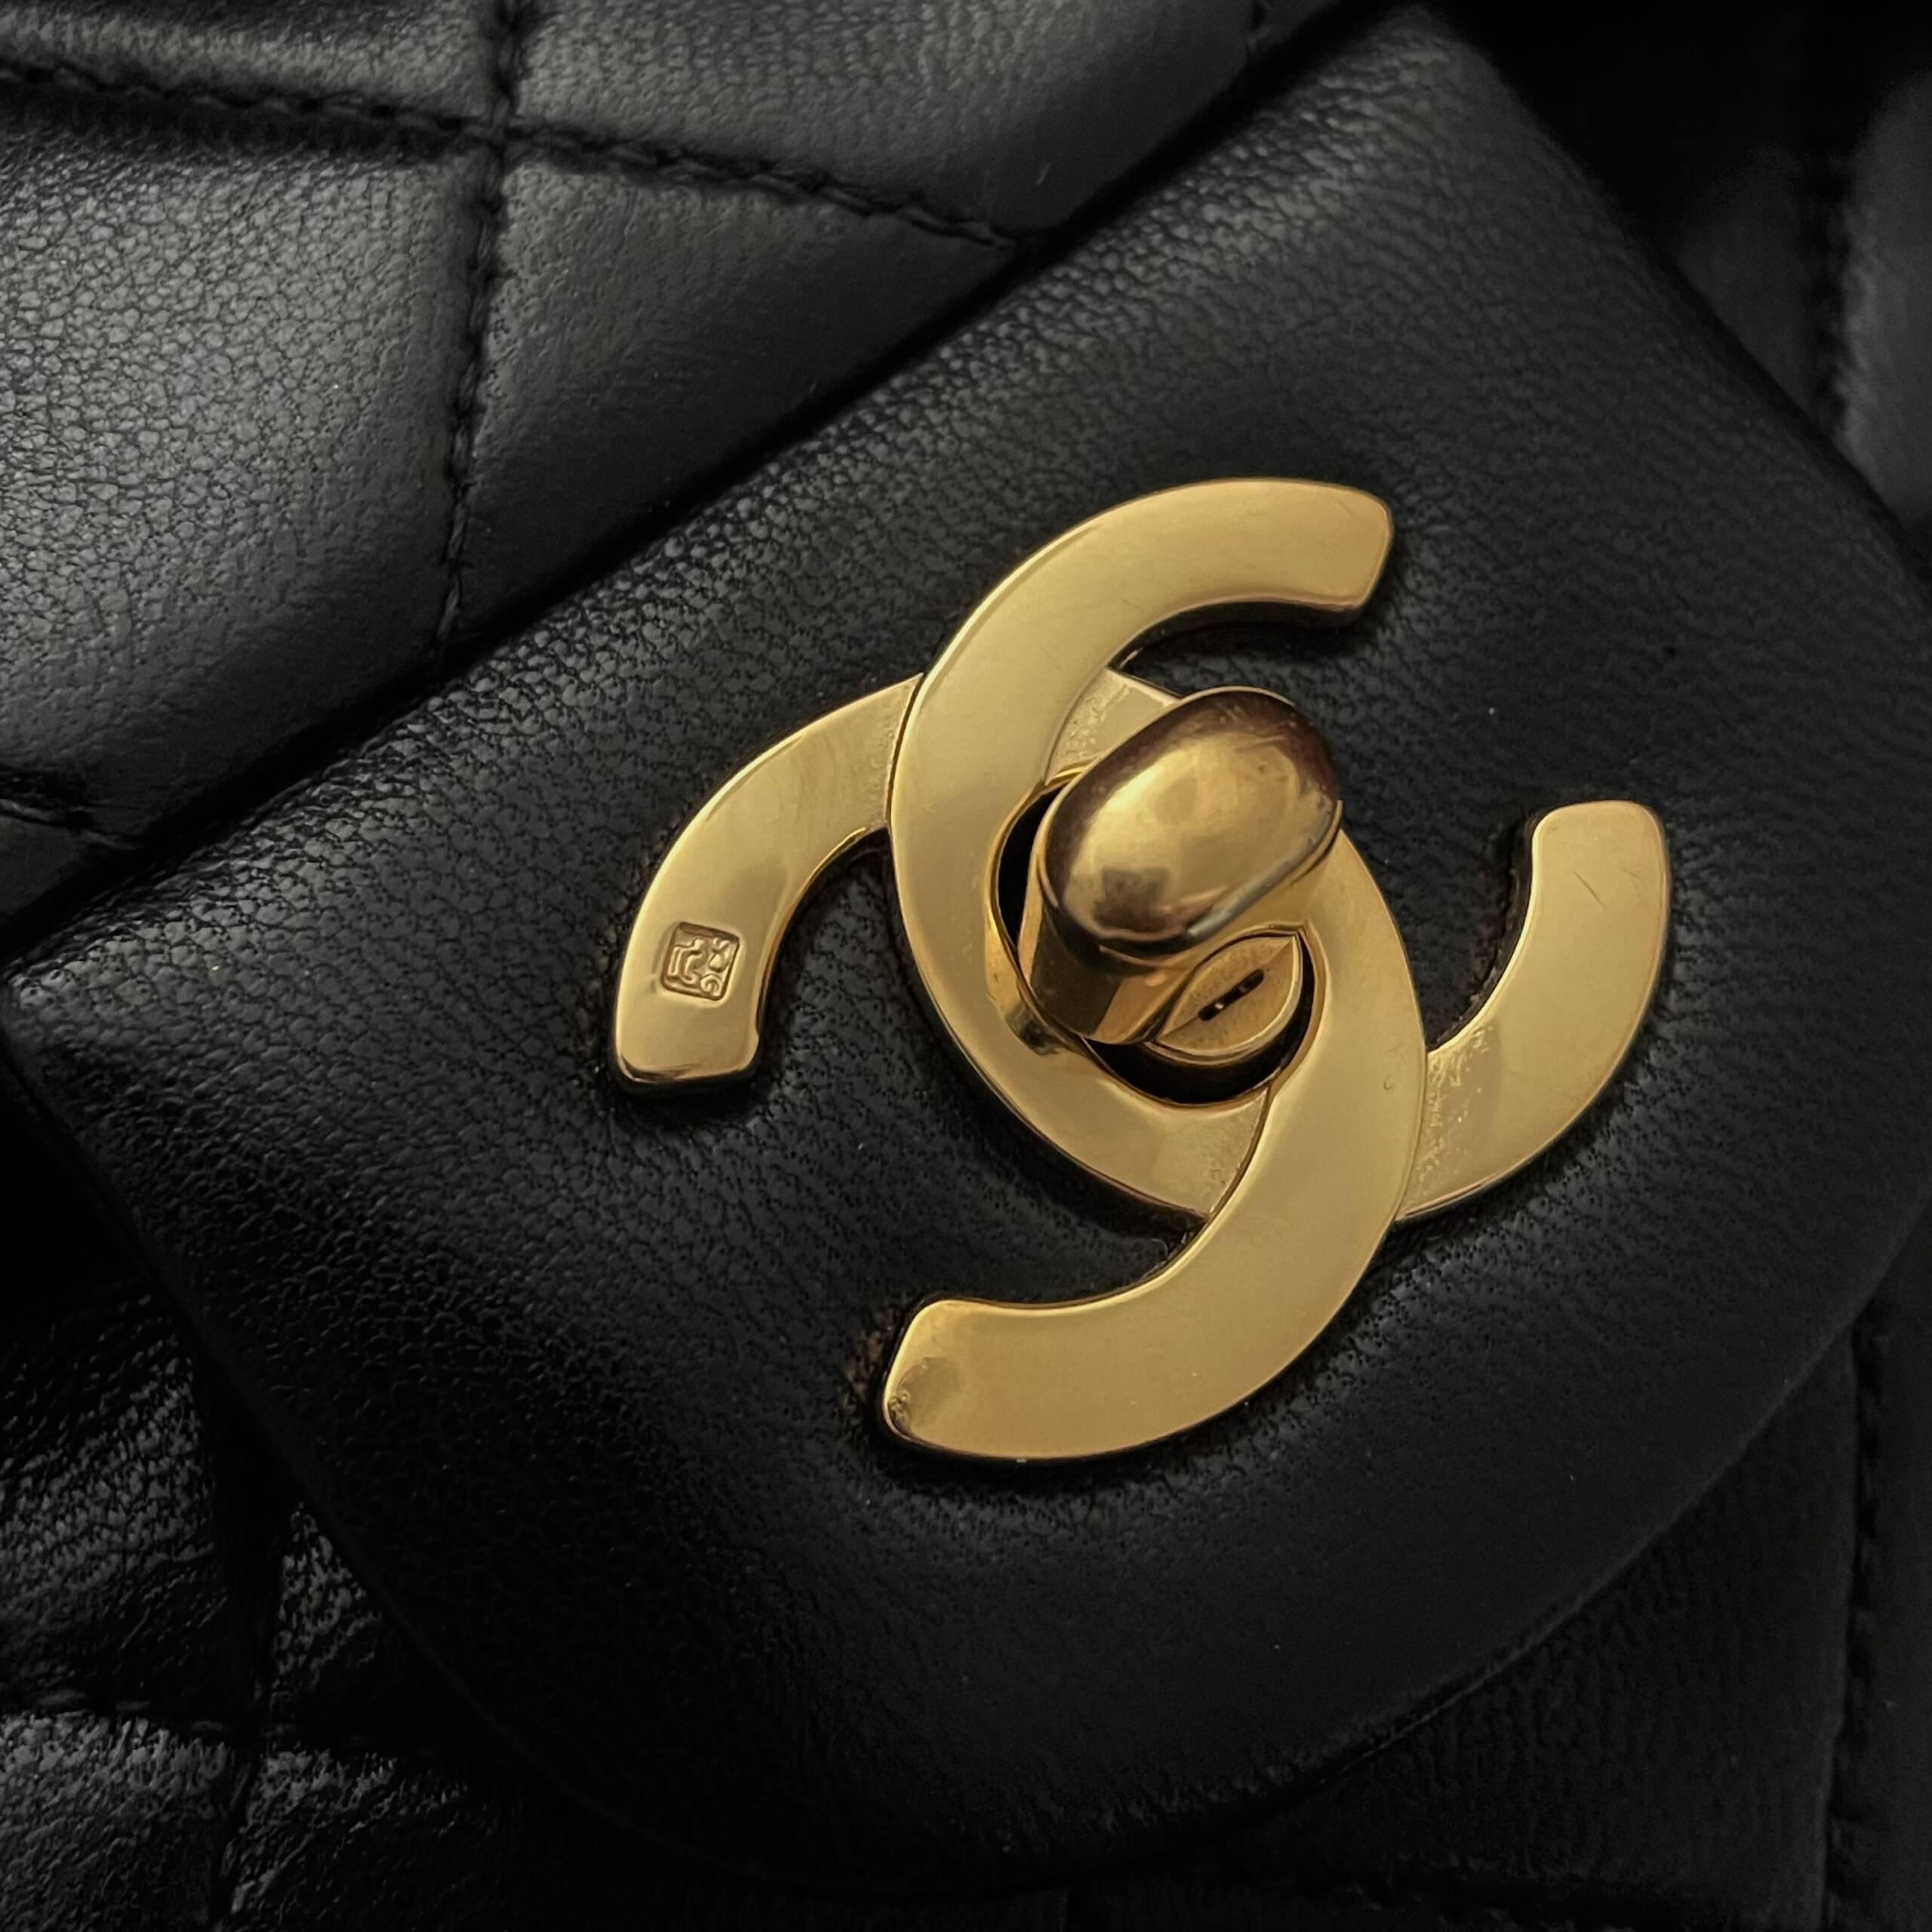 Chanel Teal Green Chevron Caviar Medium Classic Double Flap Bag